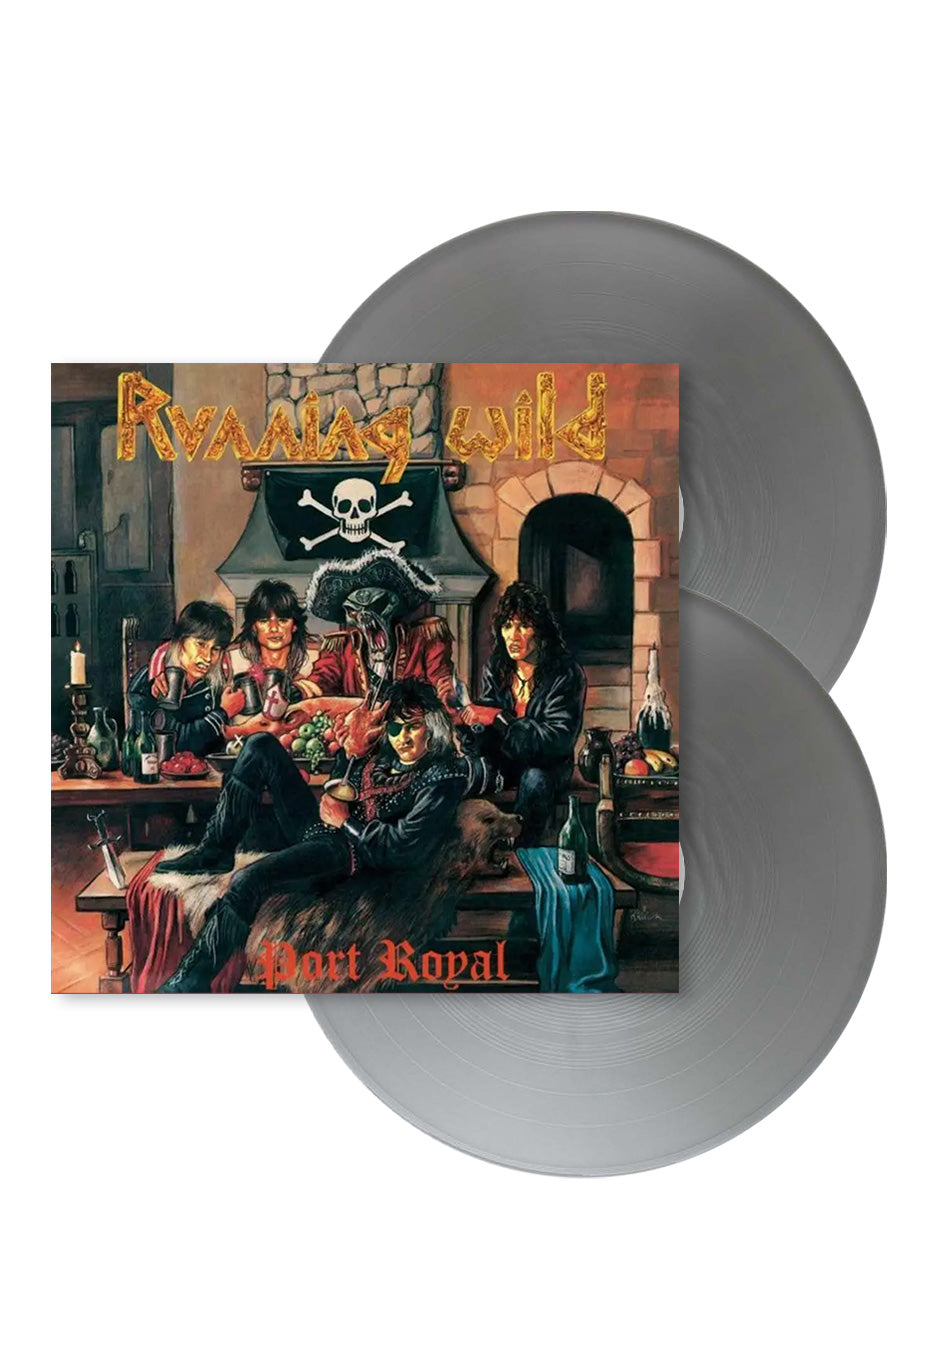 Running Wild - Port Royal Ltd. Silver - Colored Vinyl